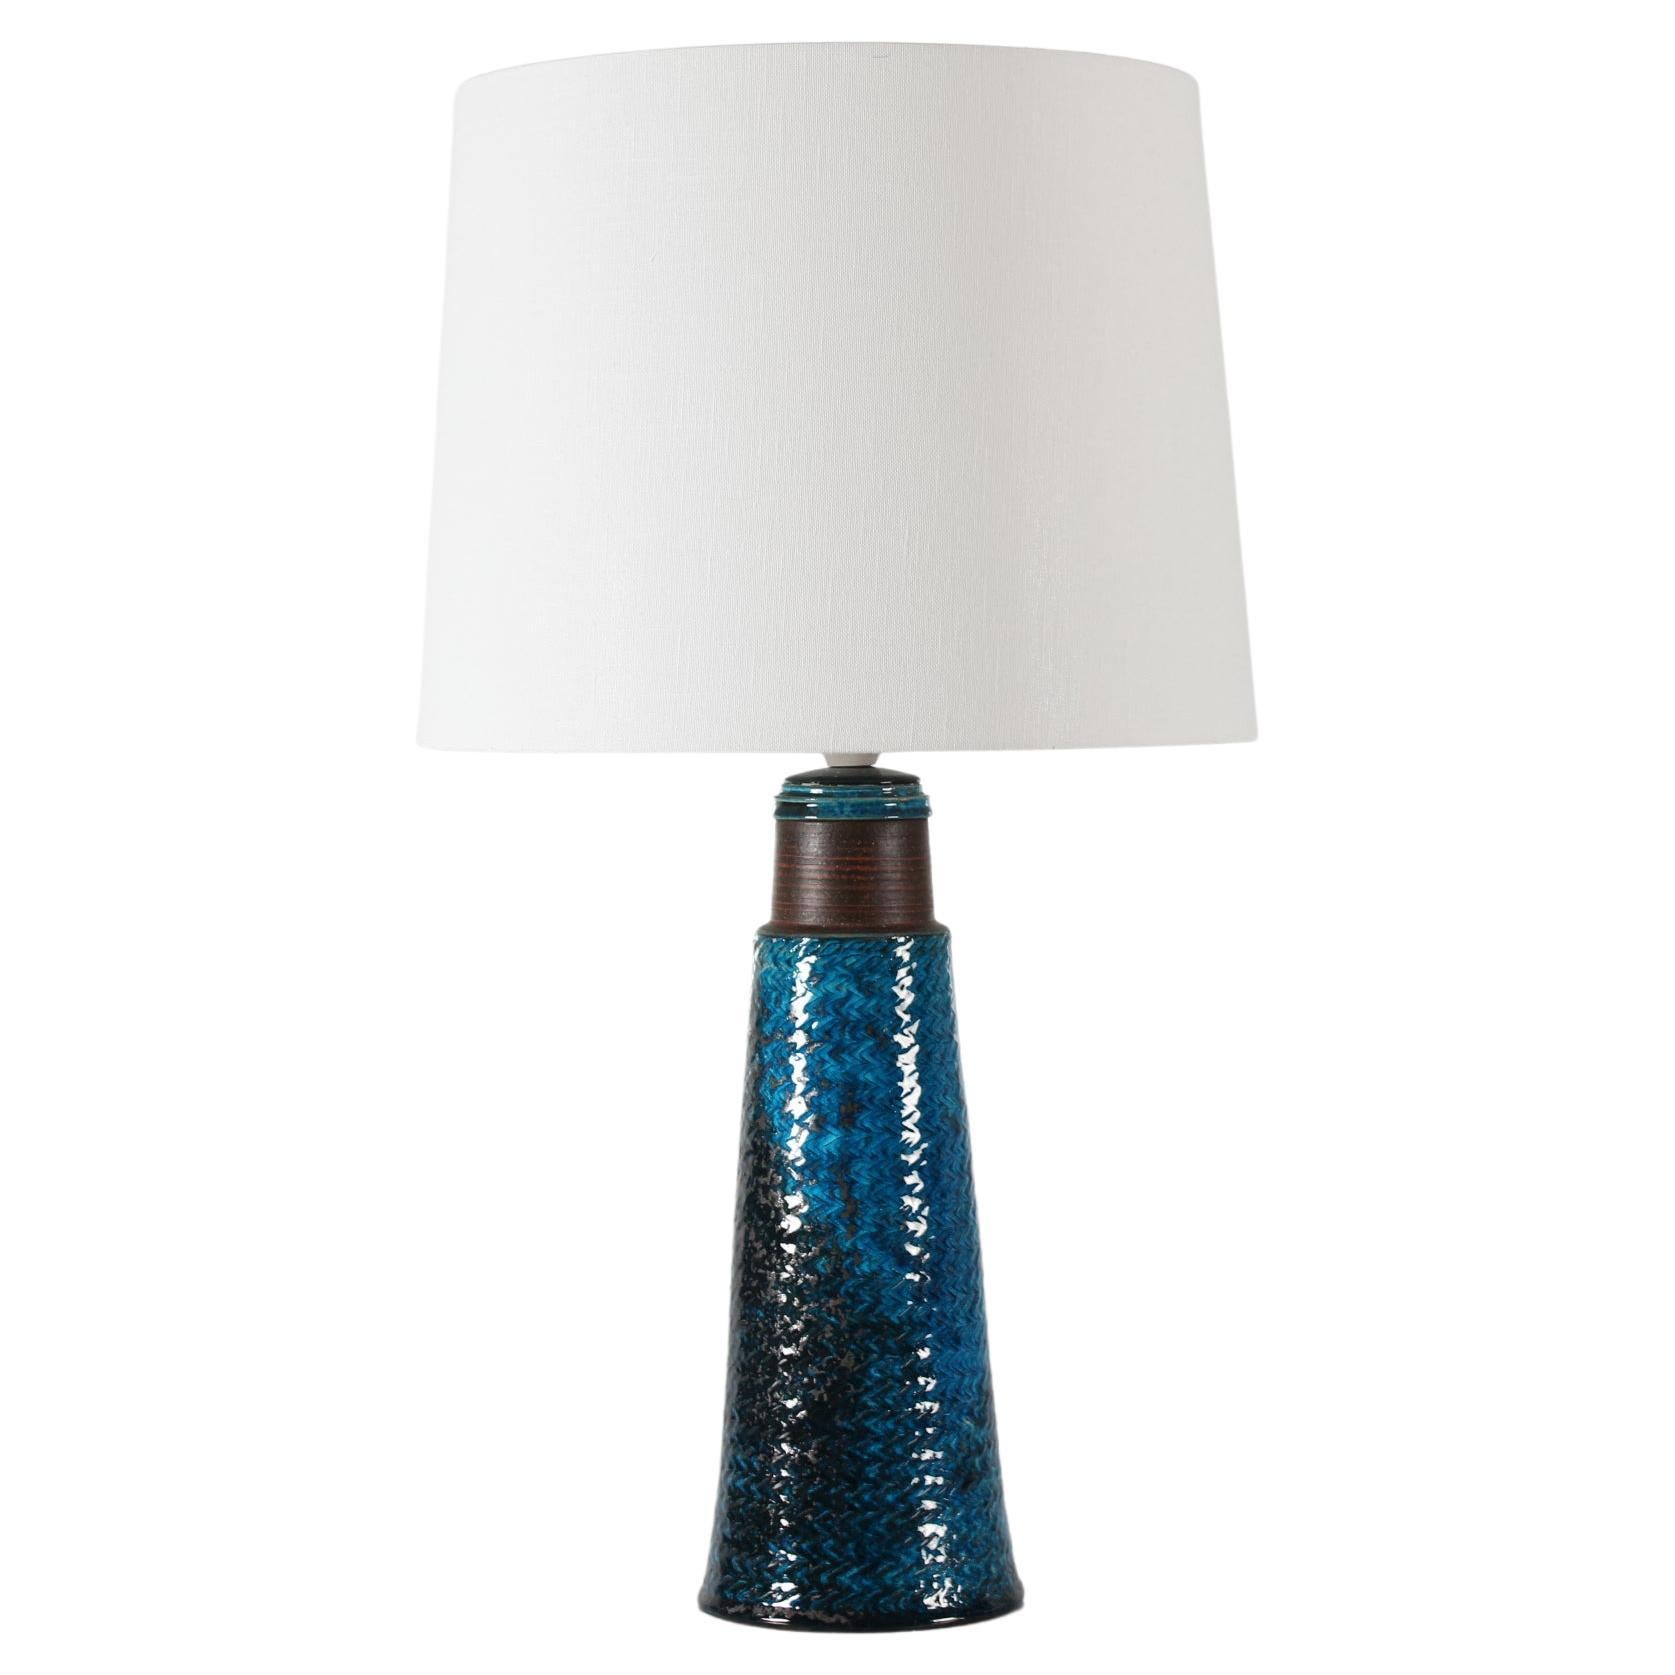 Herman A. Kähler Tall in 27 Table Lamp Turquoise Glaze Denmark Mid-Century For Sale